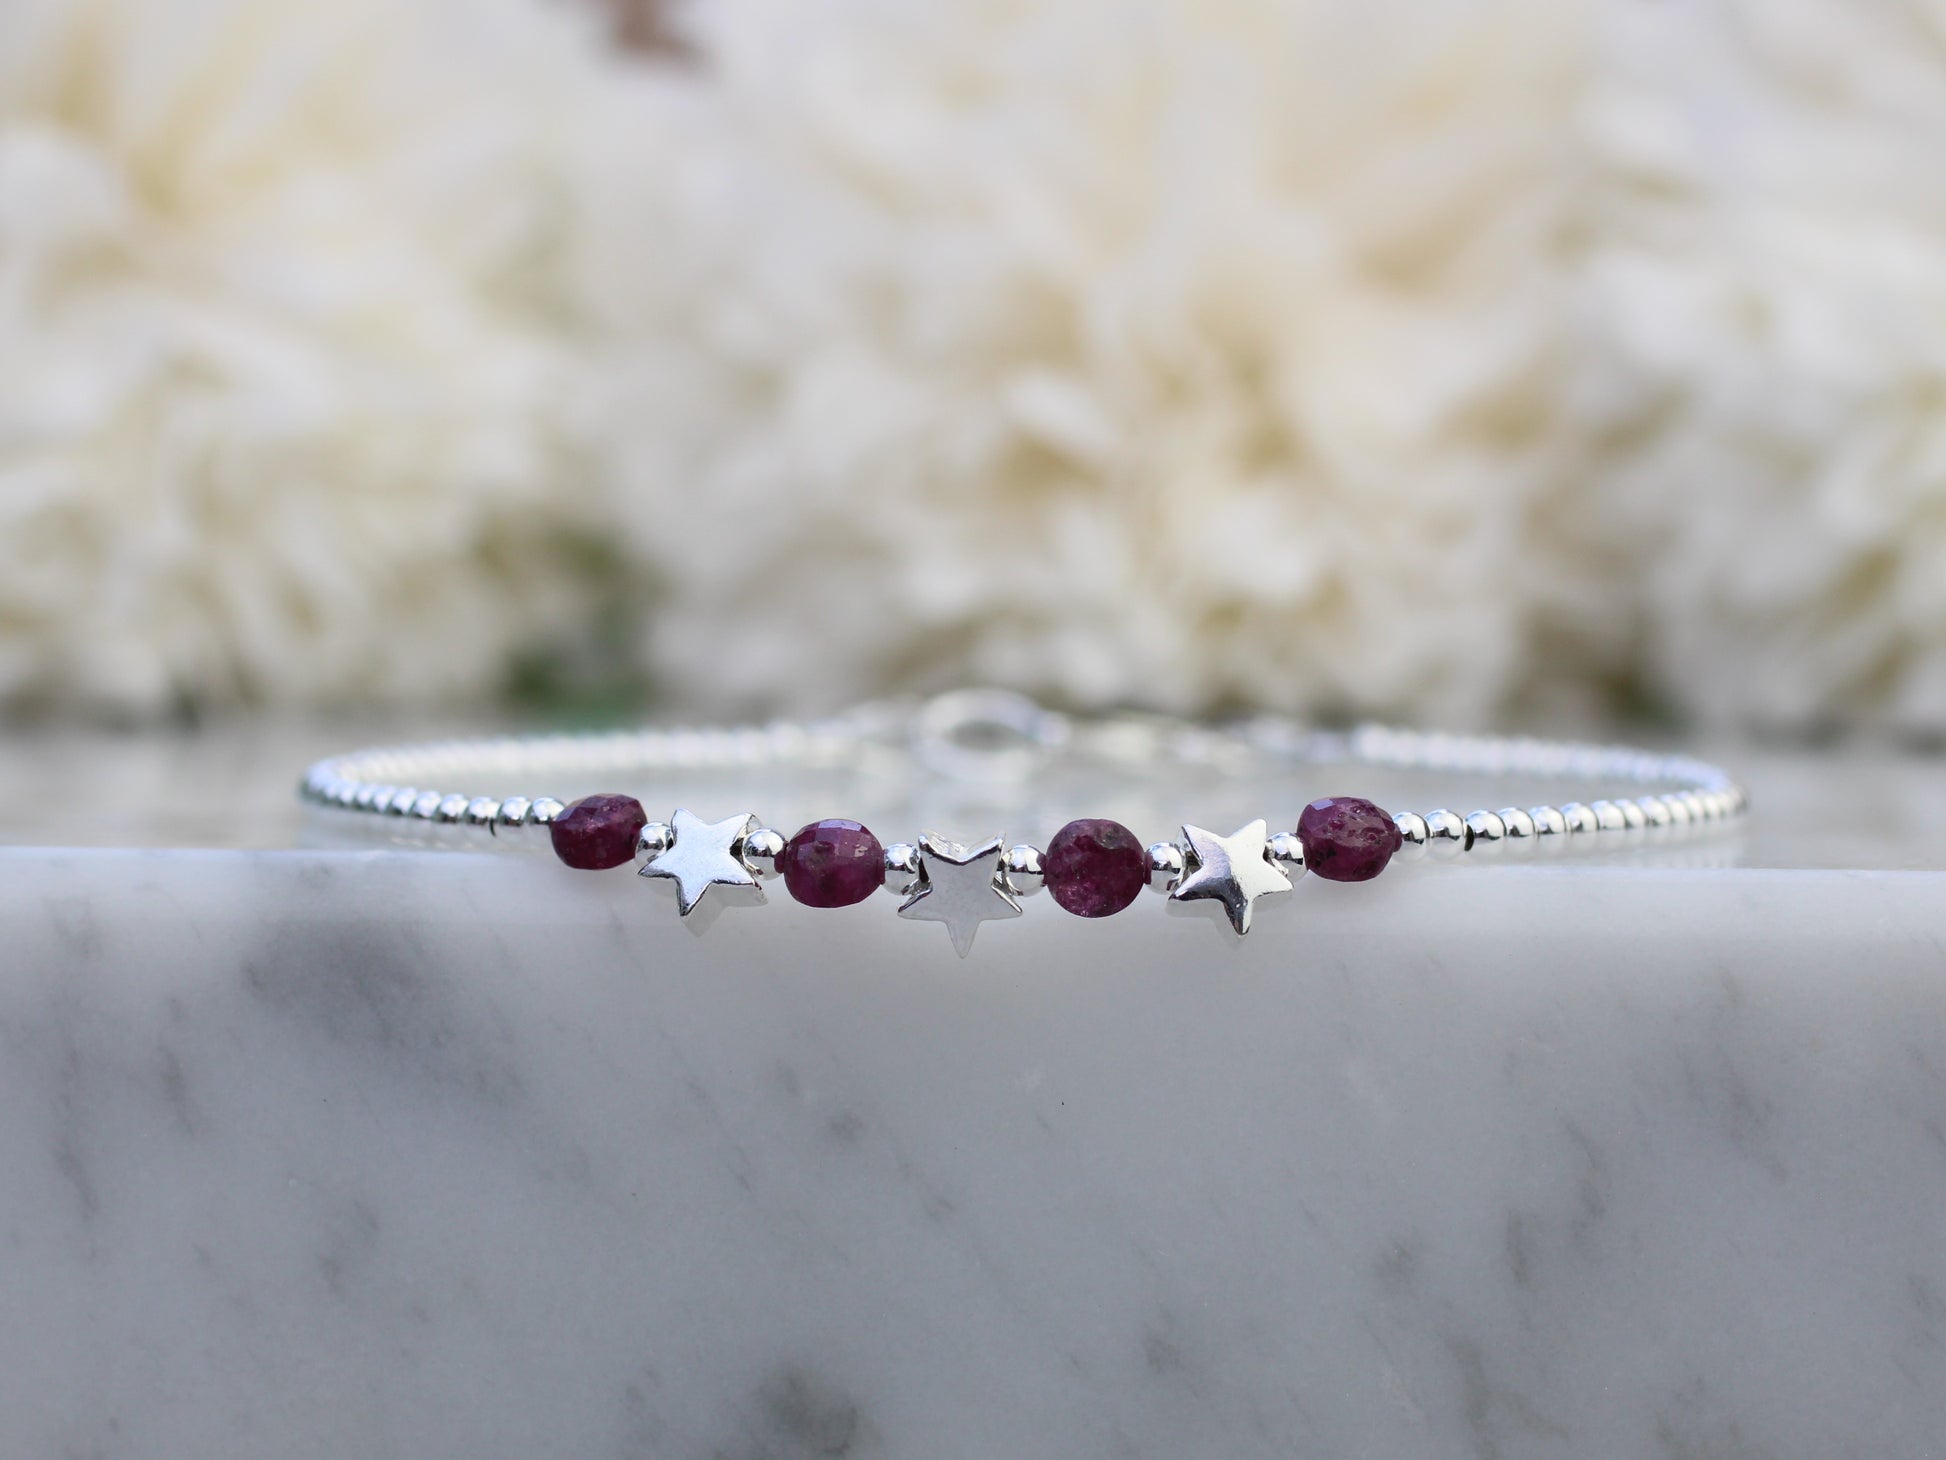 star bracelet with ruby gemstones